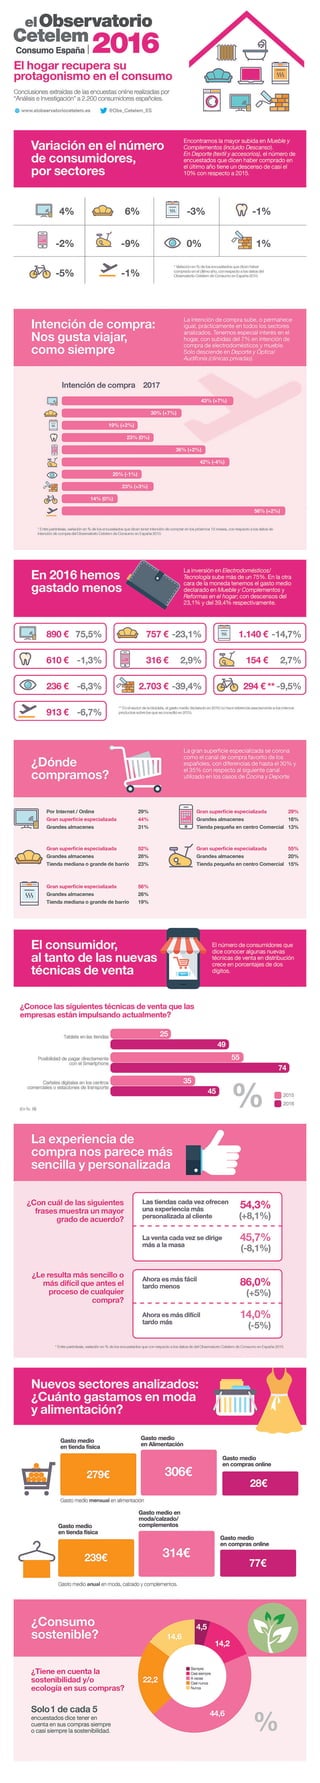 Infografia obs cetelem_consumo_espana_2016_p